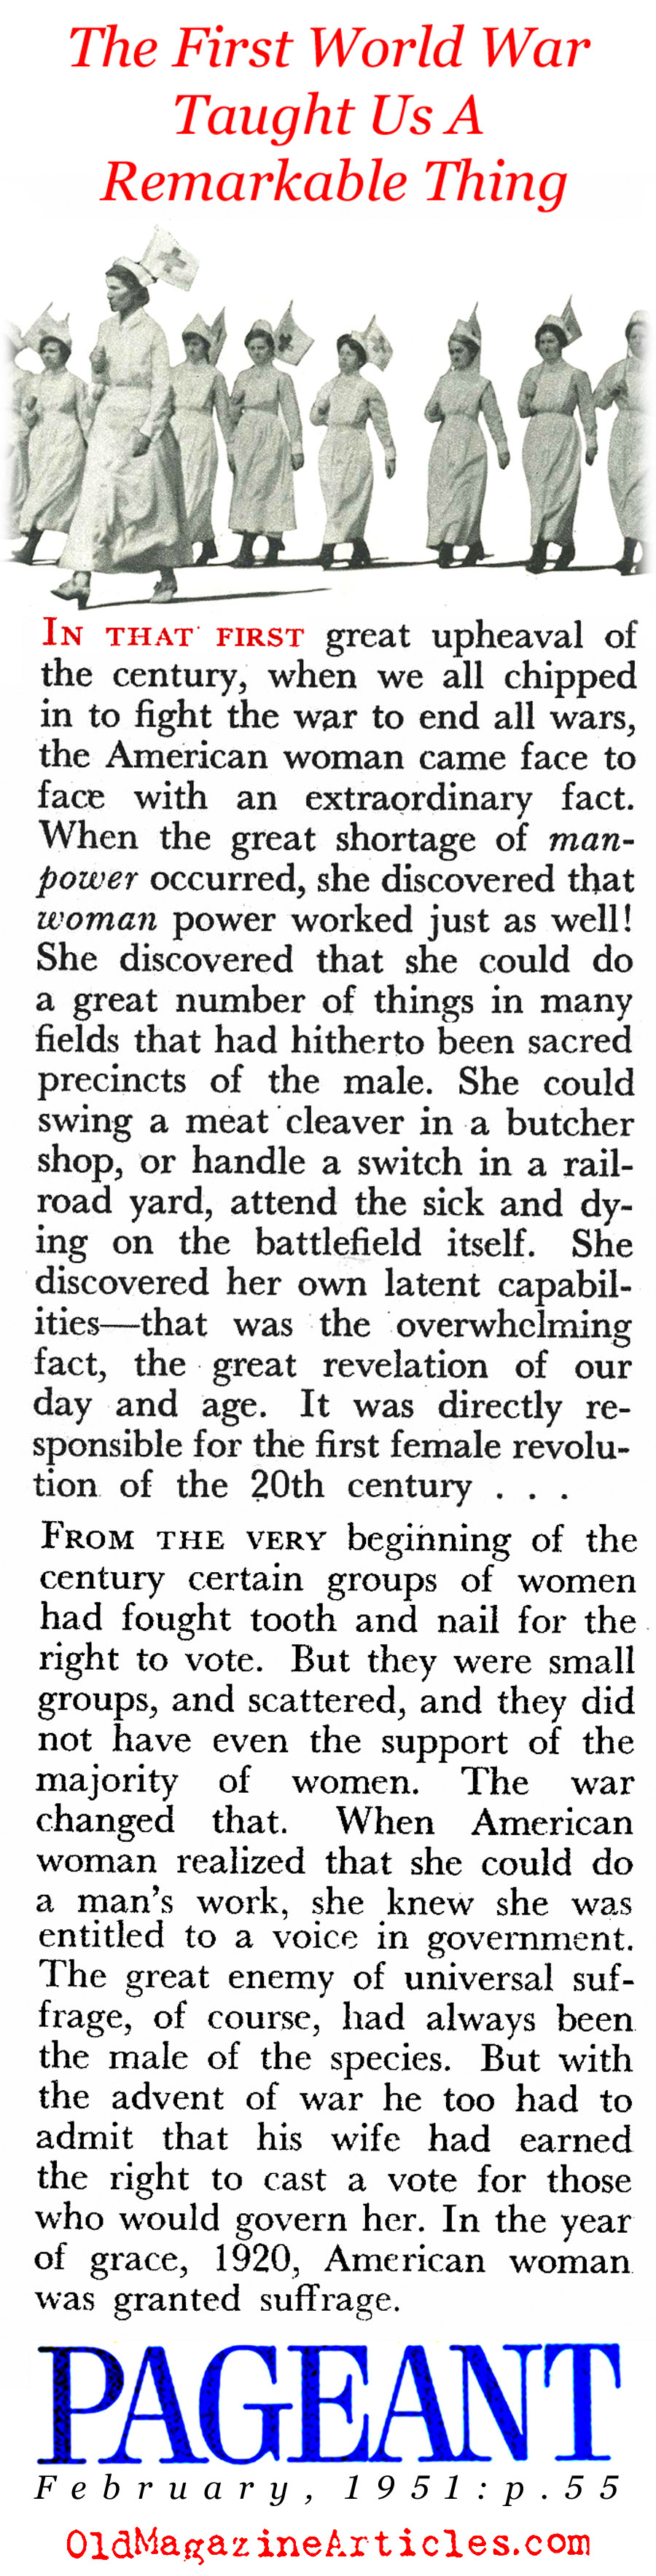 W.W. I and American Women (Pageant Magazine, 1951)